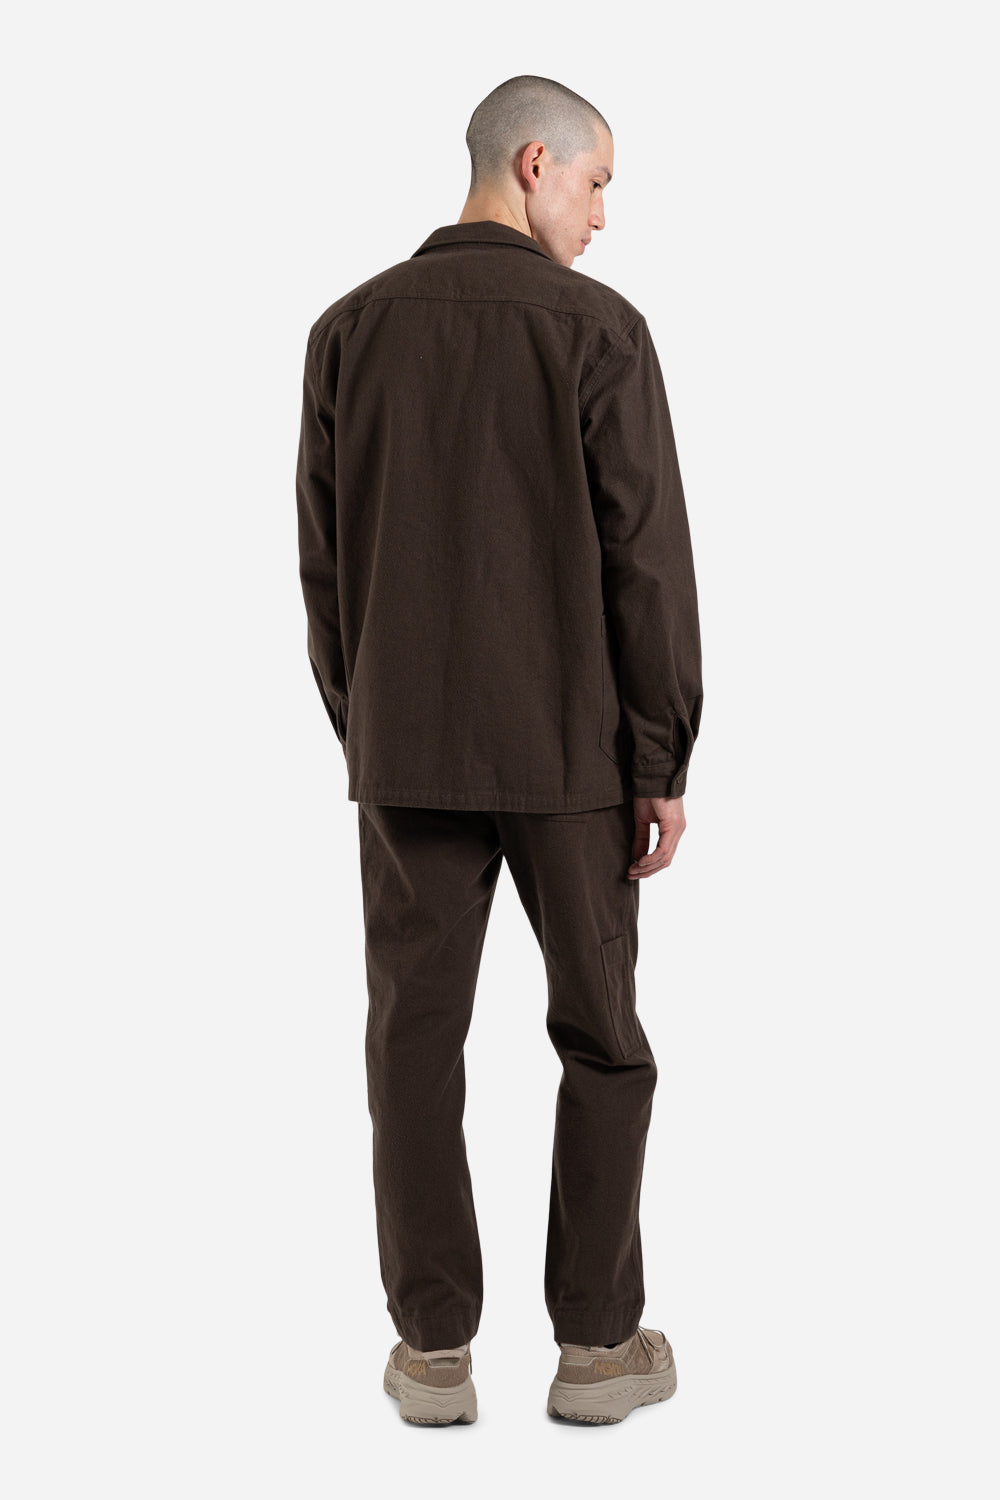 kestin_ormiston-shirt-jacket-peat